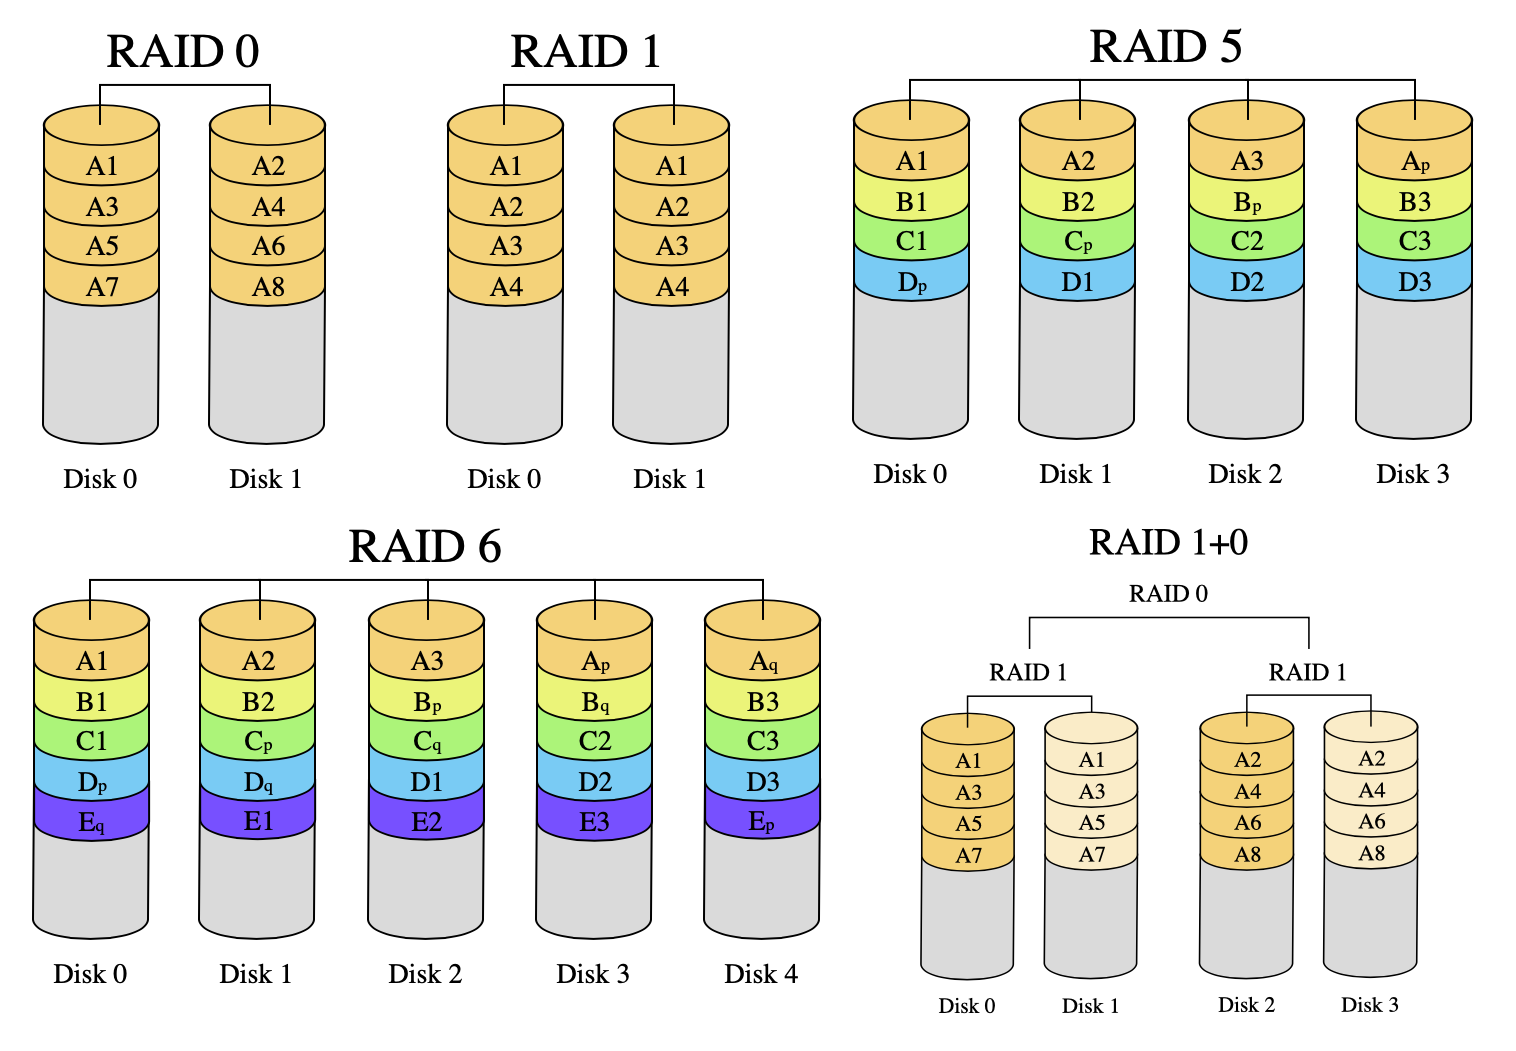 RAID 0, 1, 5, 6, and 10 visualized